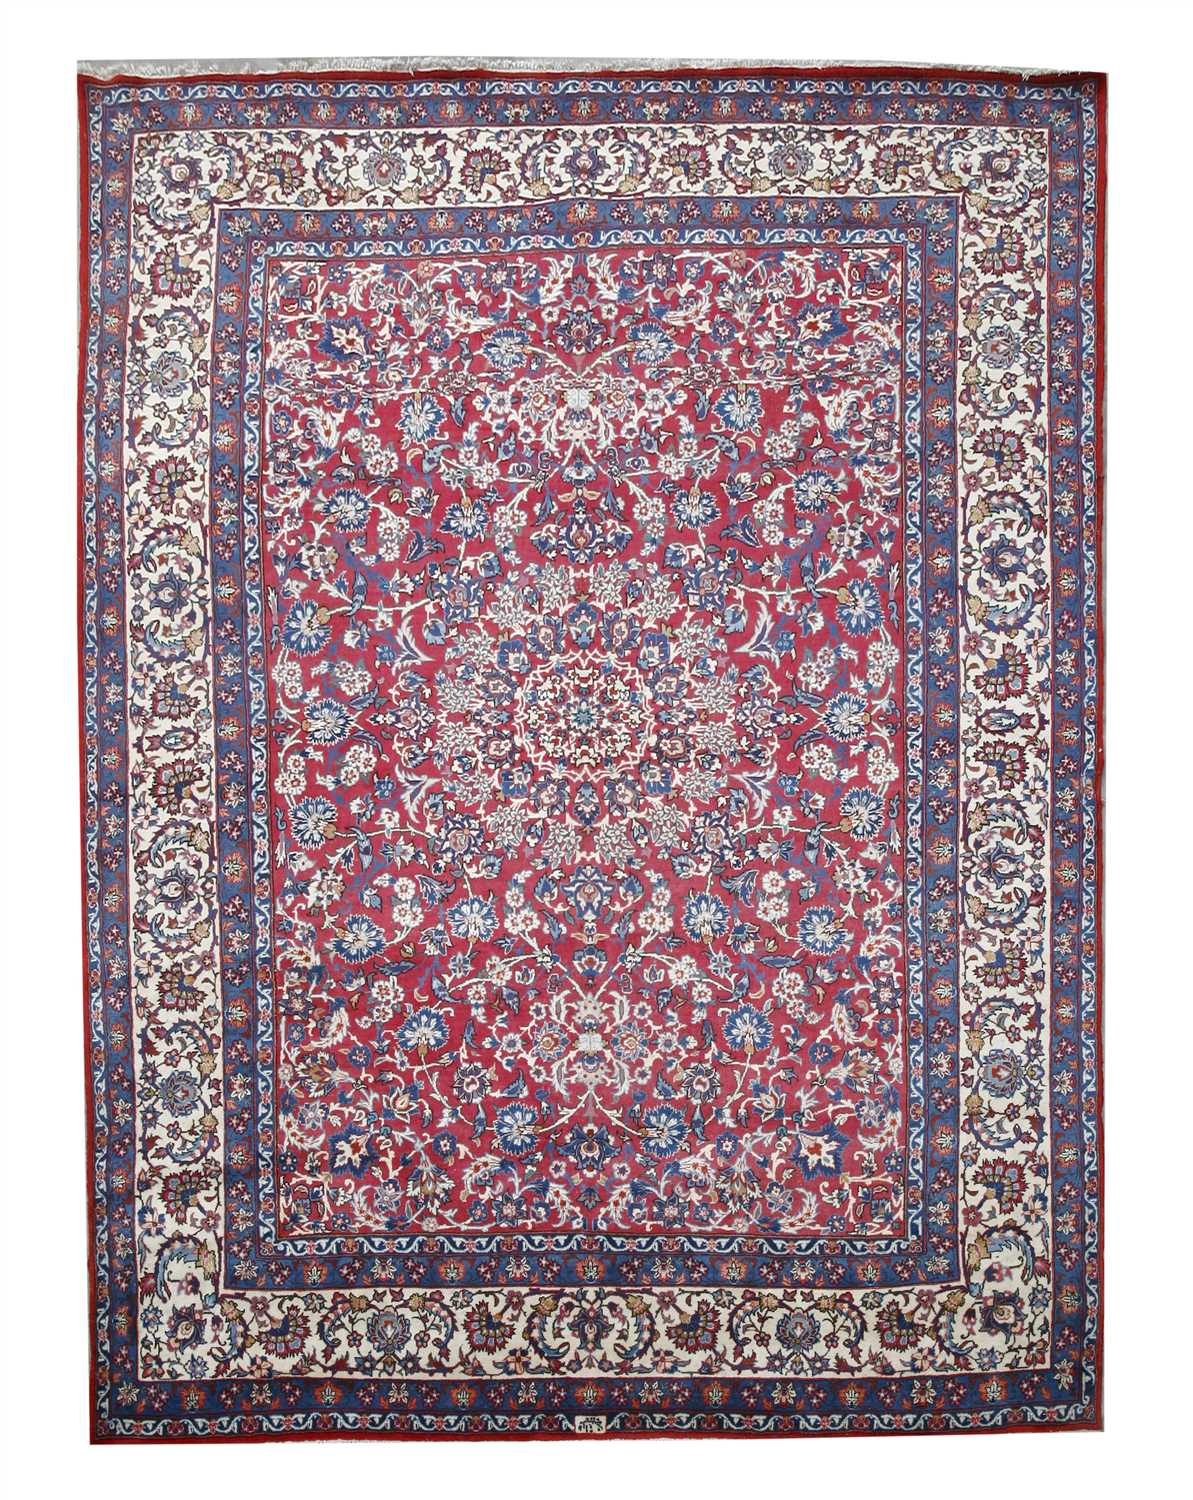 Lot 350 - A Najafabad carpet